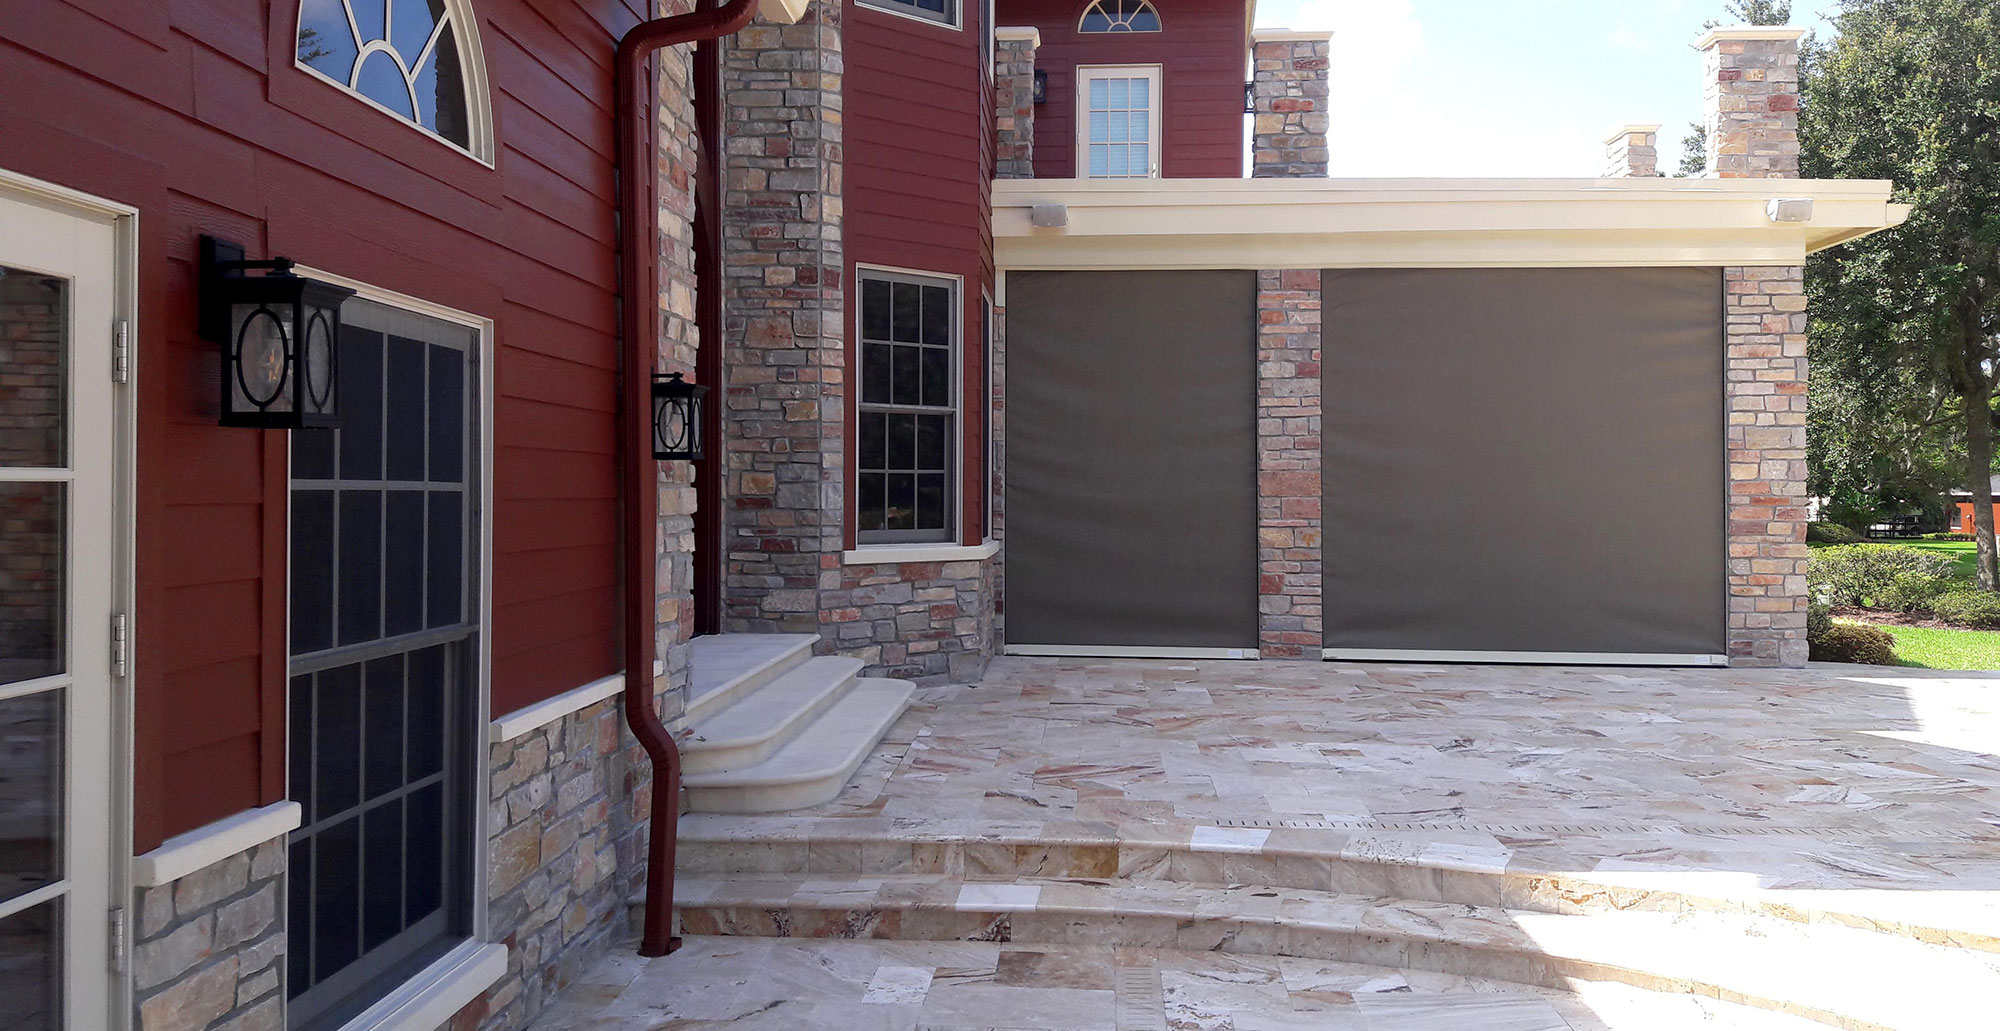 Modern rustic dream home full thin stone veneer exterior craftsman entry outdoor patio landscaping HERO 1280x660 ee